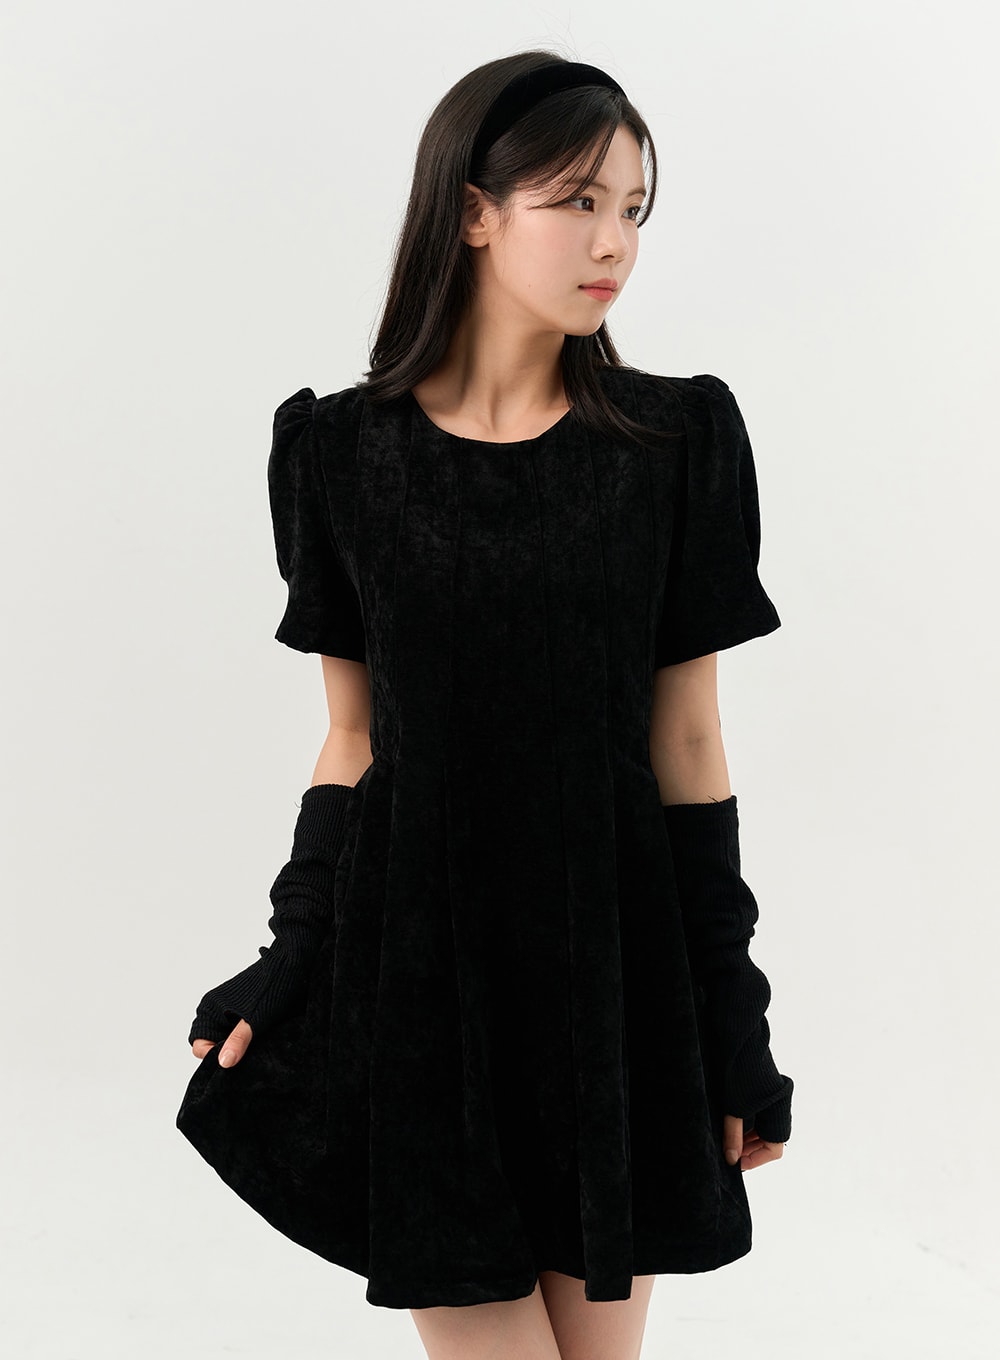 Knitted Arm Warmer OO331 - Korean Women's Fashion | LEWKIN